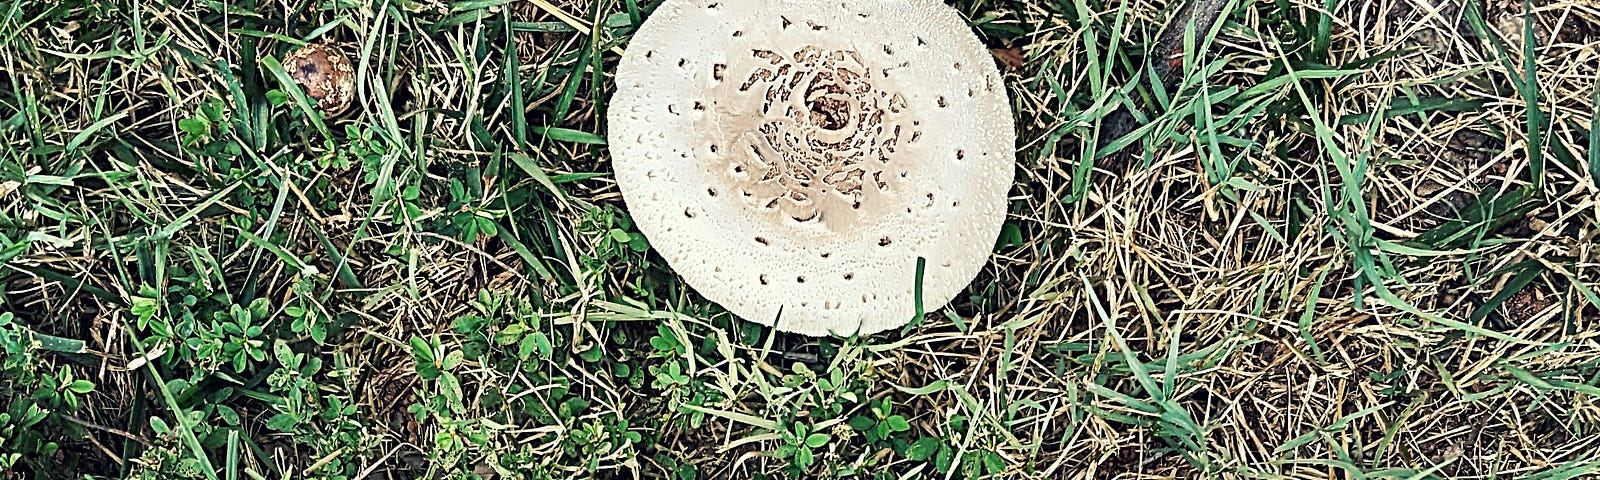 Crazy-looking mushrooms. Photo Credit: Tremaine L. Loadholt